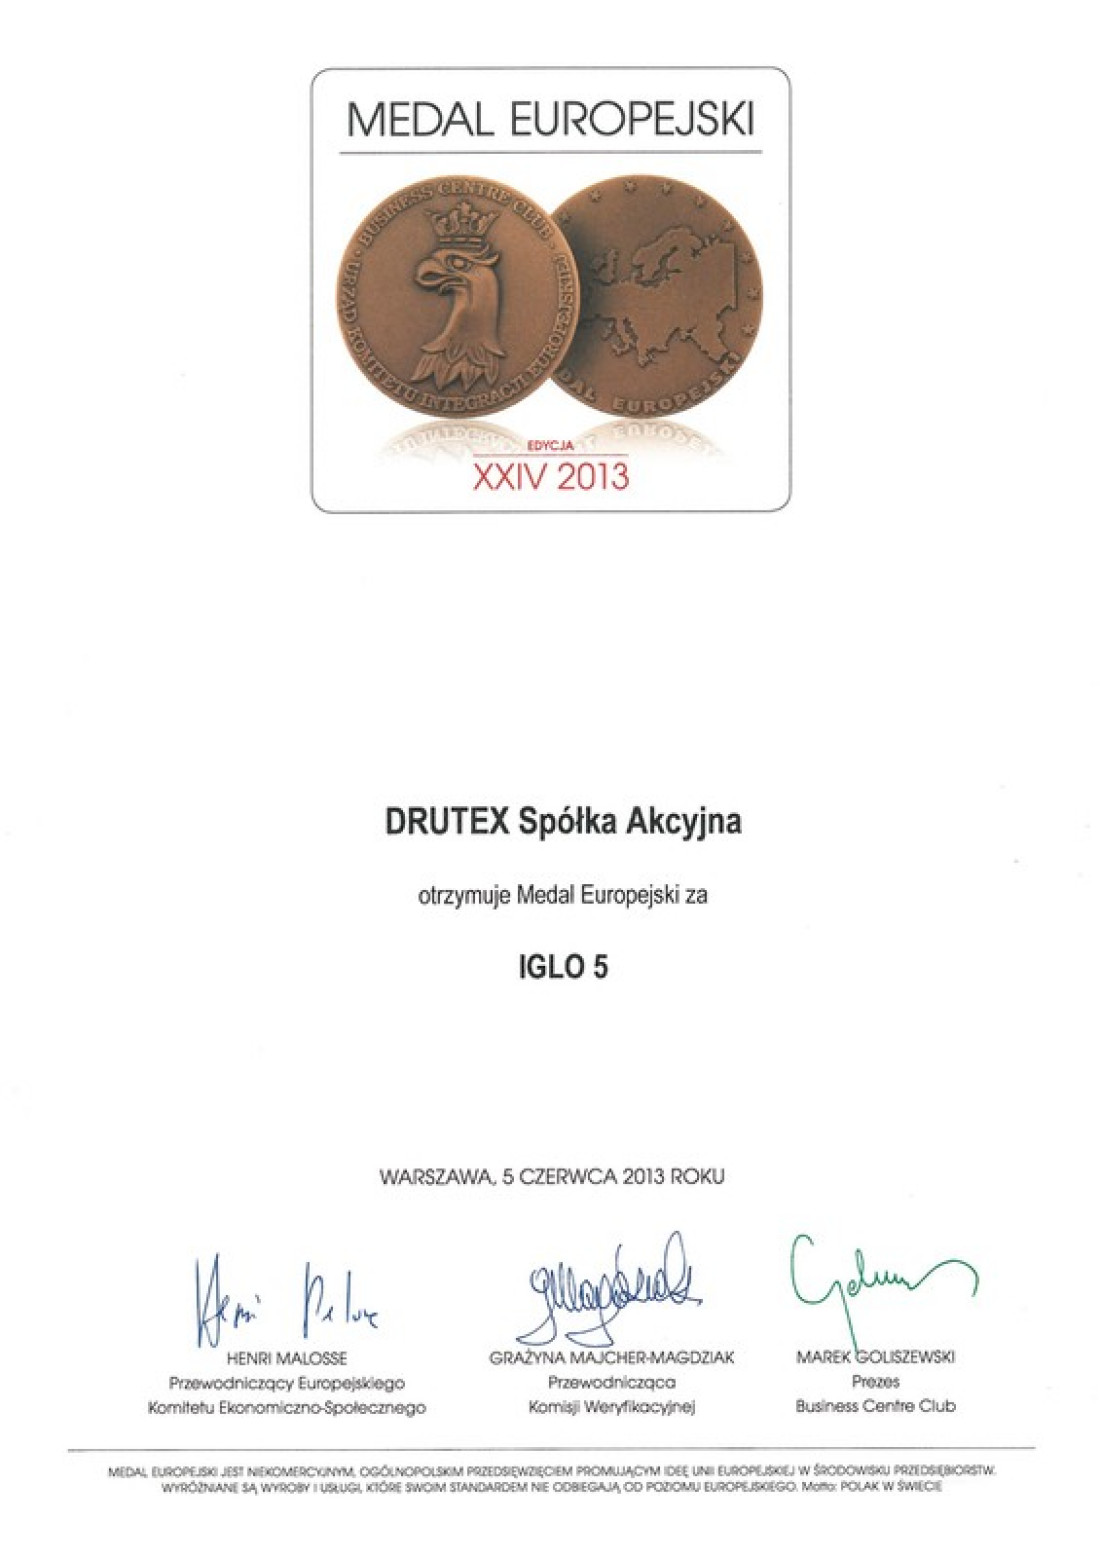 Drutex nagrodzony Medalem Europejskim